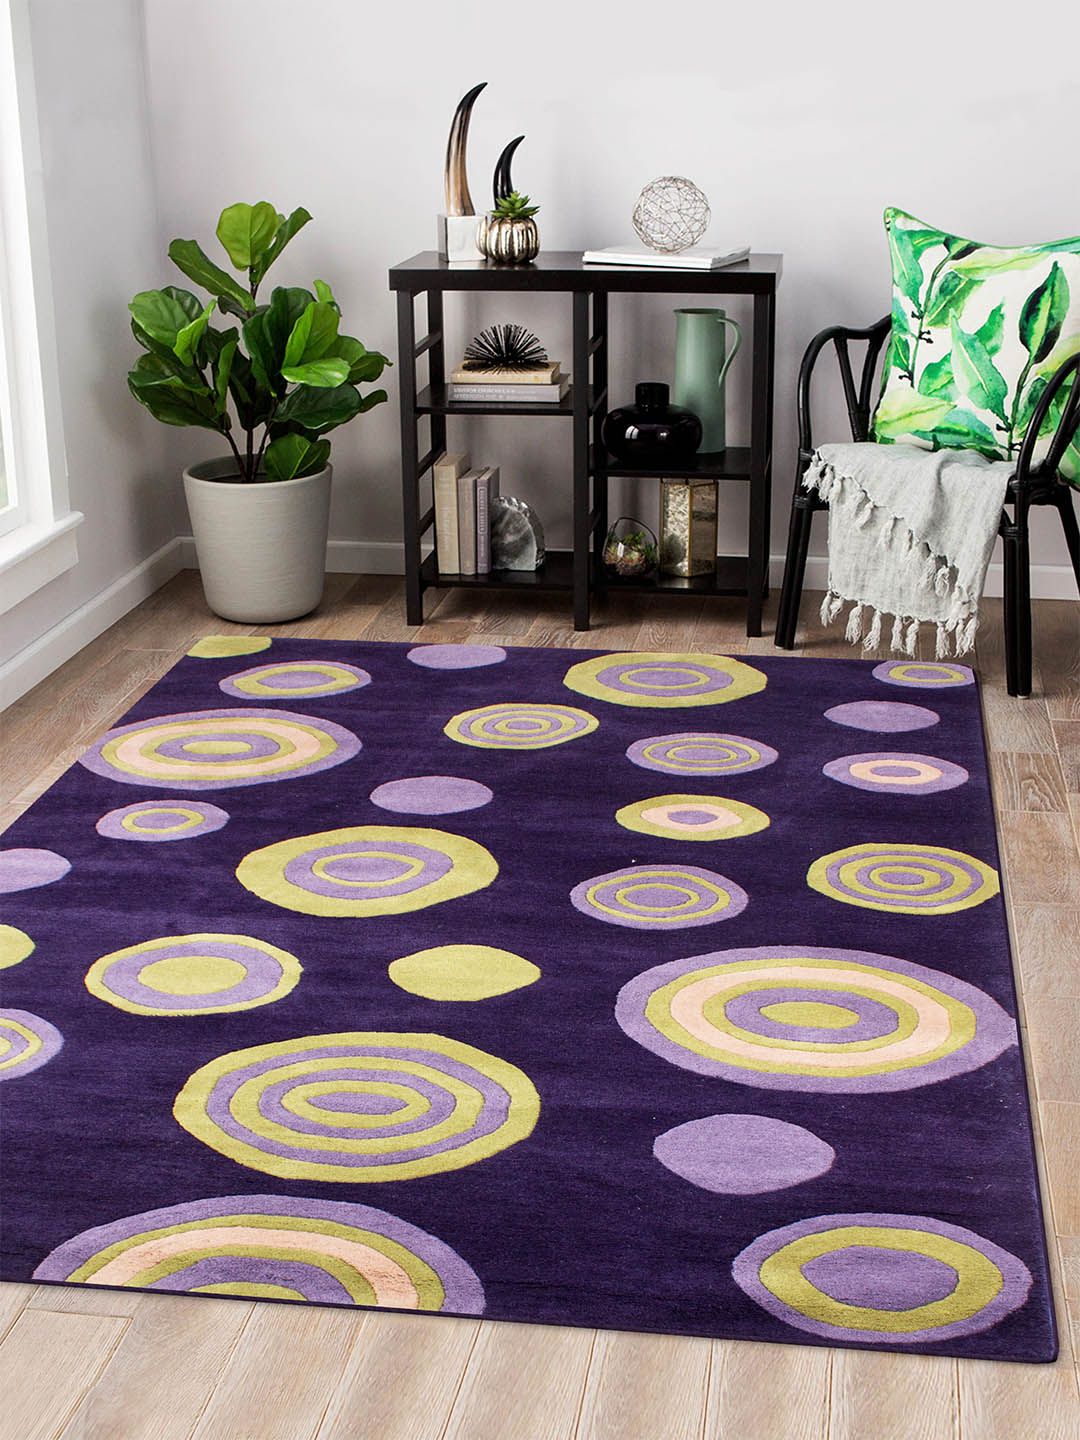 Story@home Purple & Yellow Geometric Printed Carpet Price in India